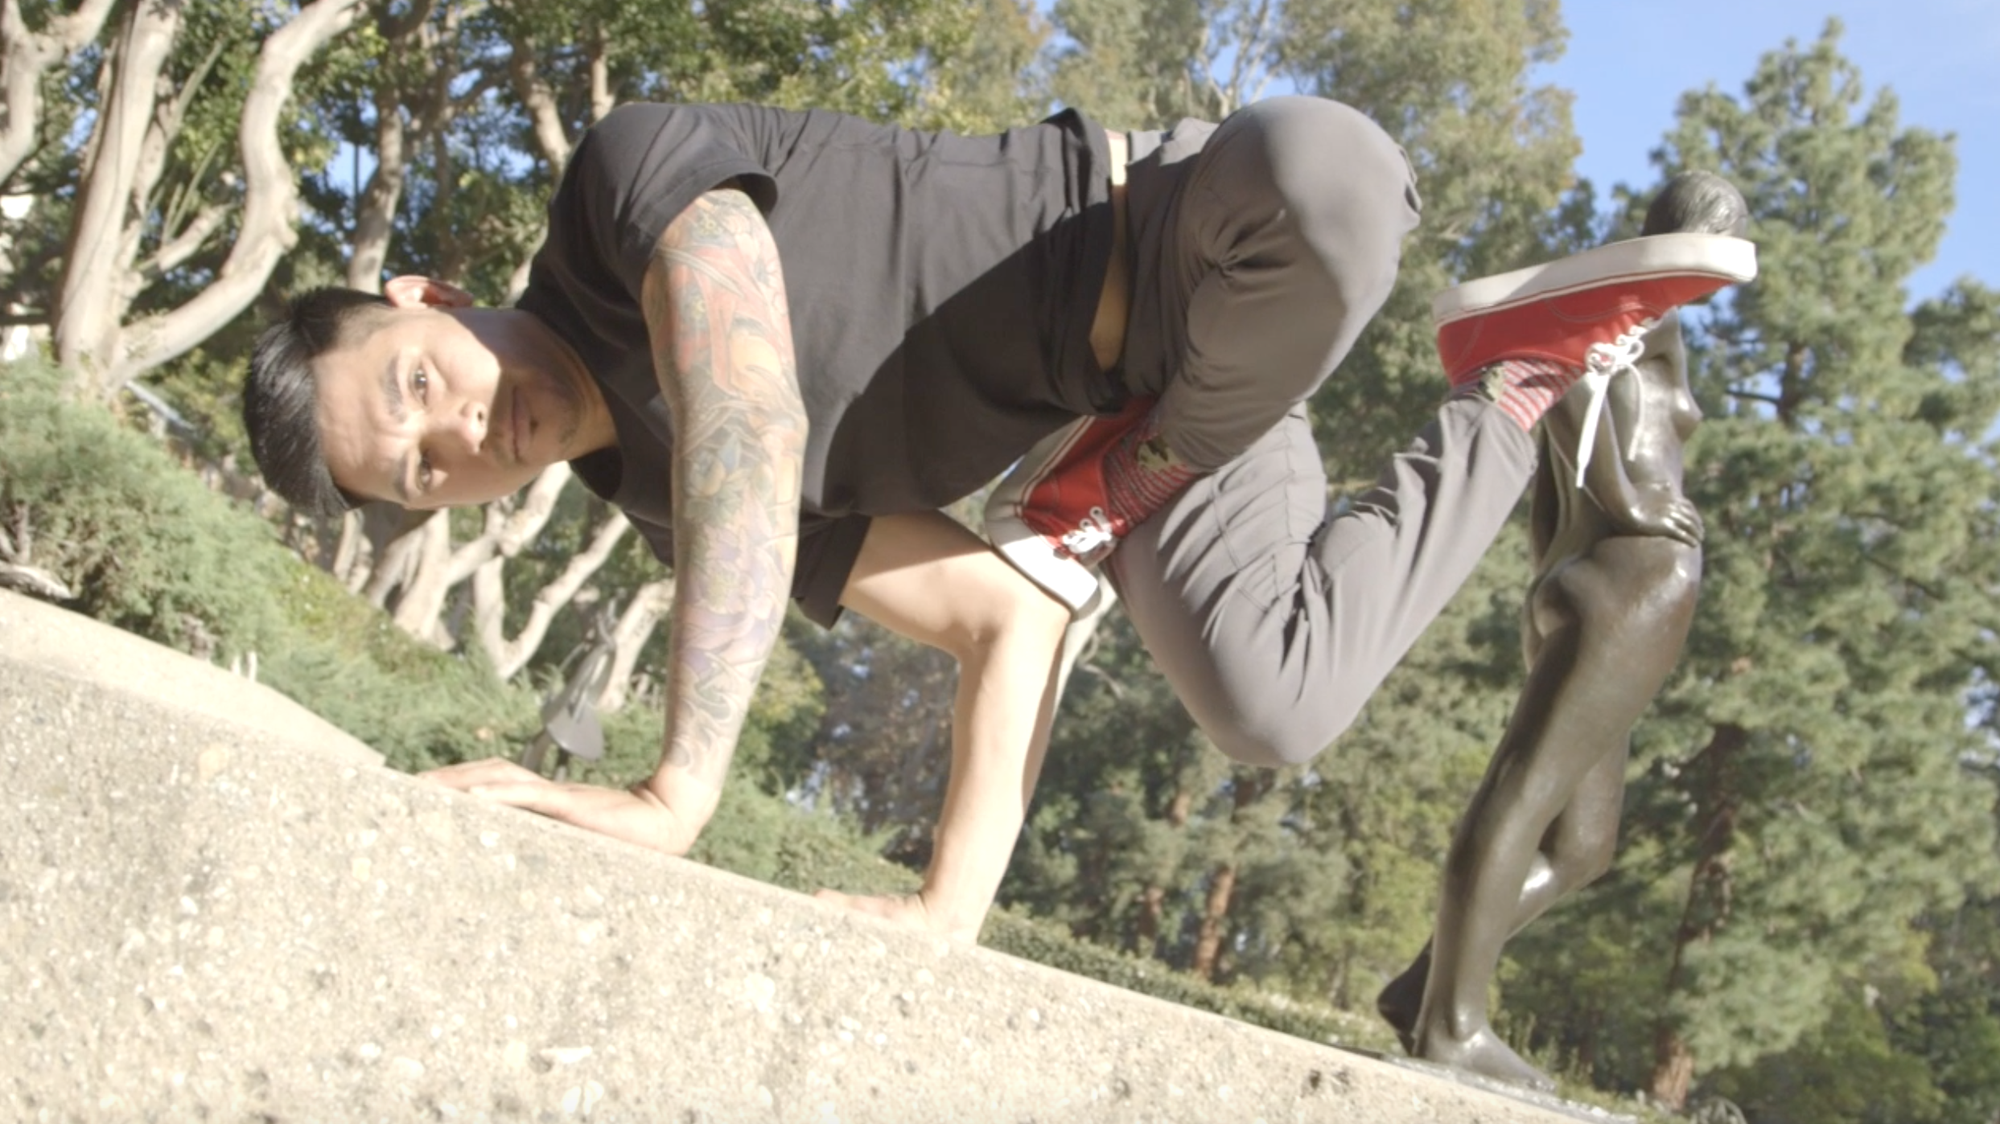 goedkoop genoeg oppervlakkig Video: Marco Antonio discusses his community-focused yoga - Daily Bruin